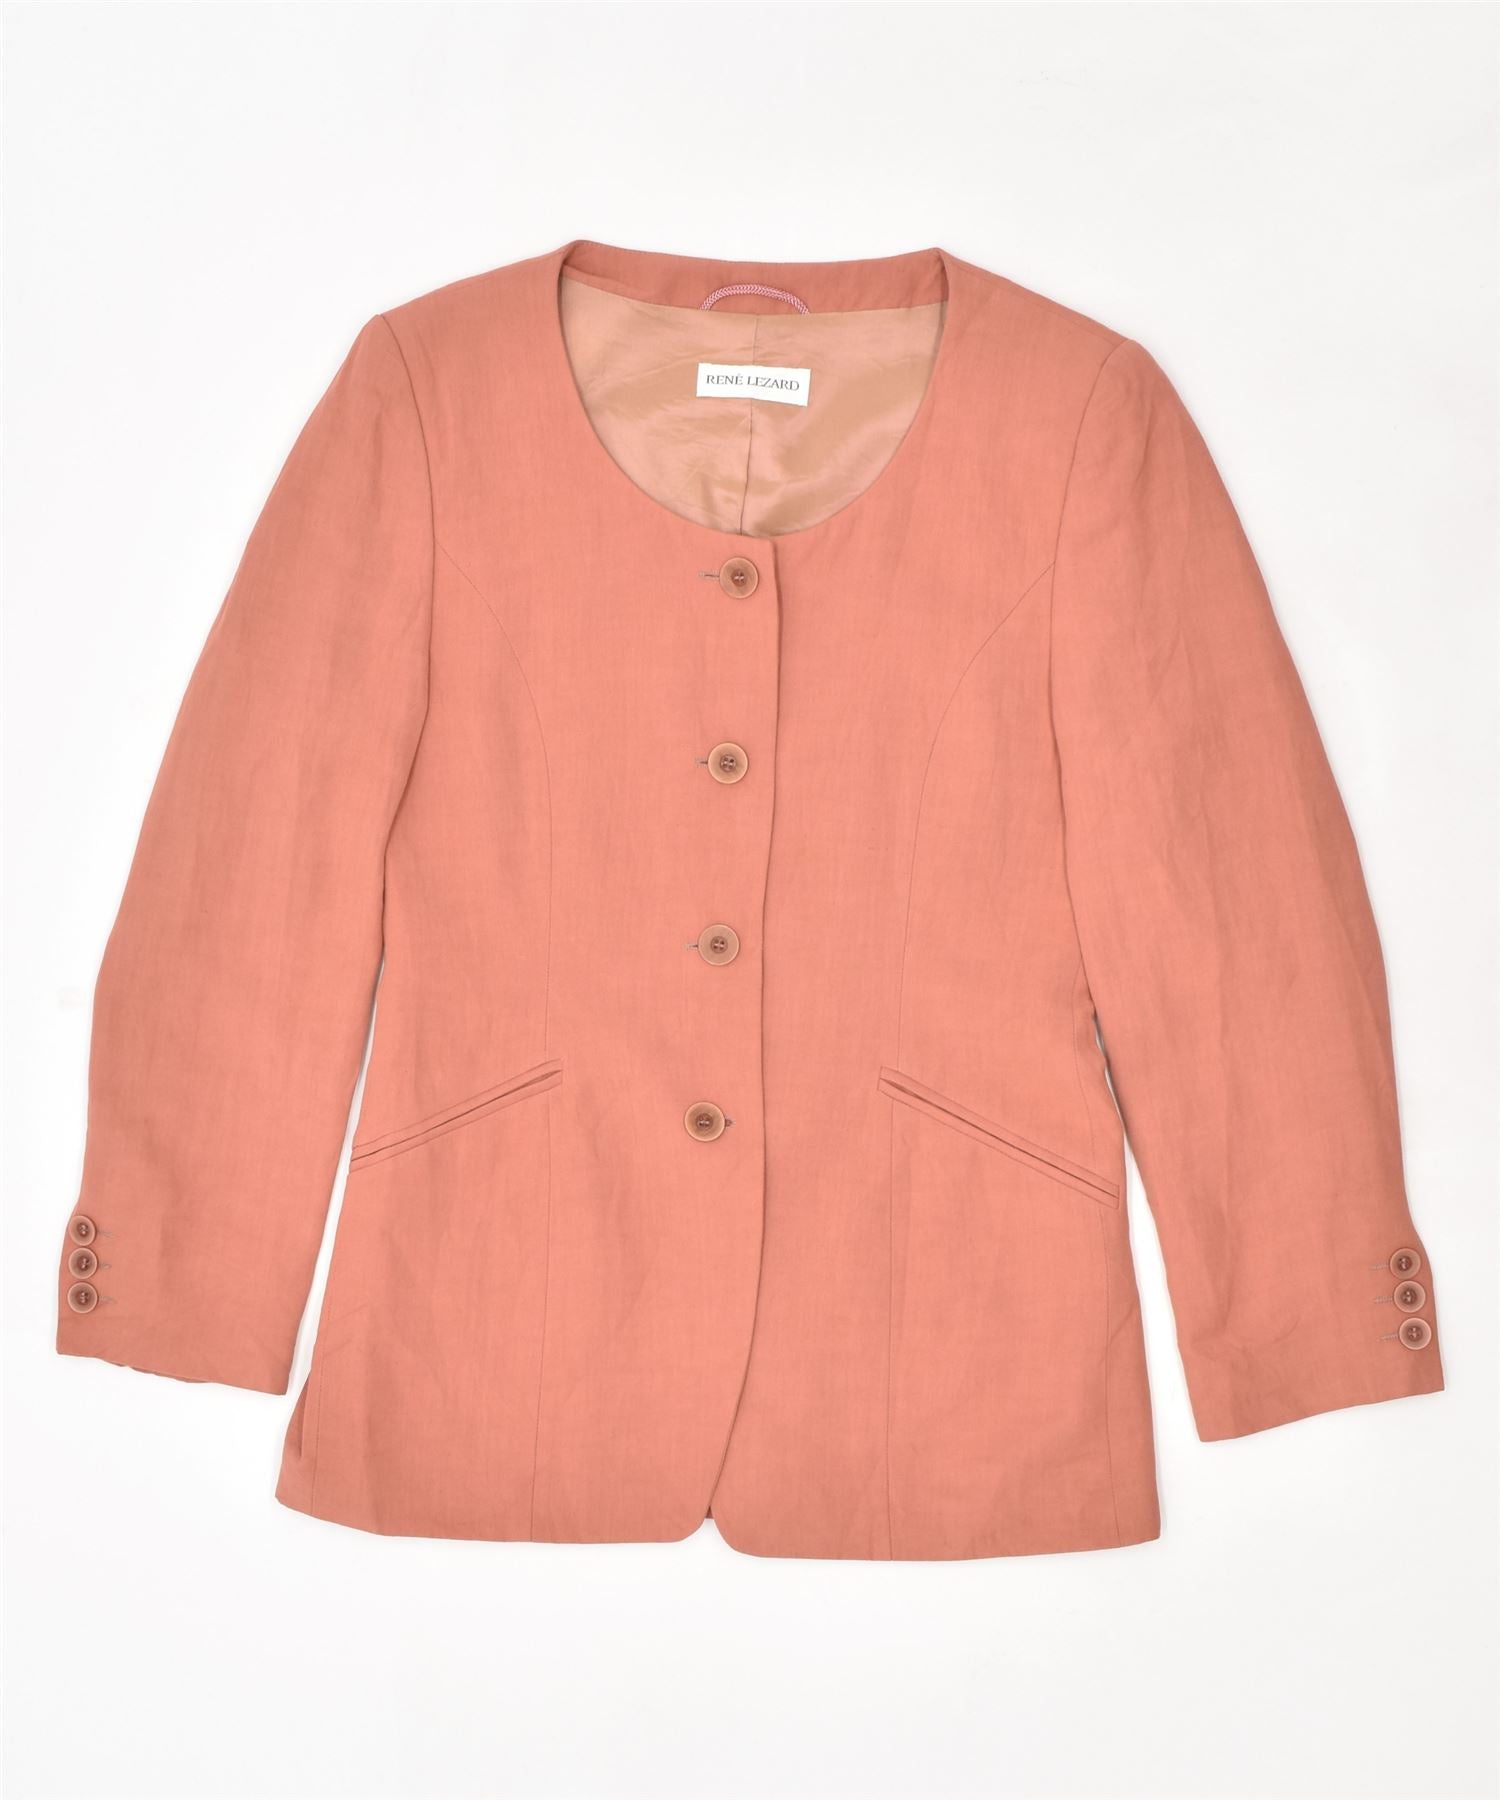 RENE LEZARD Womens 4 Button Blazer Jacket IT 42 Medium Pink Viscose Vintage